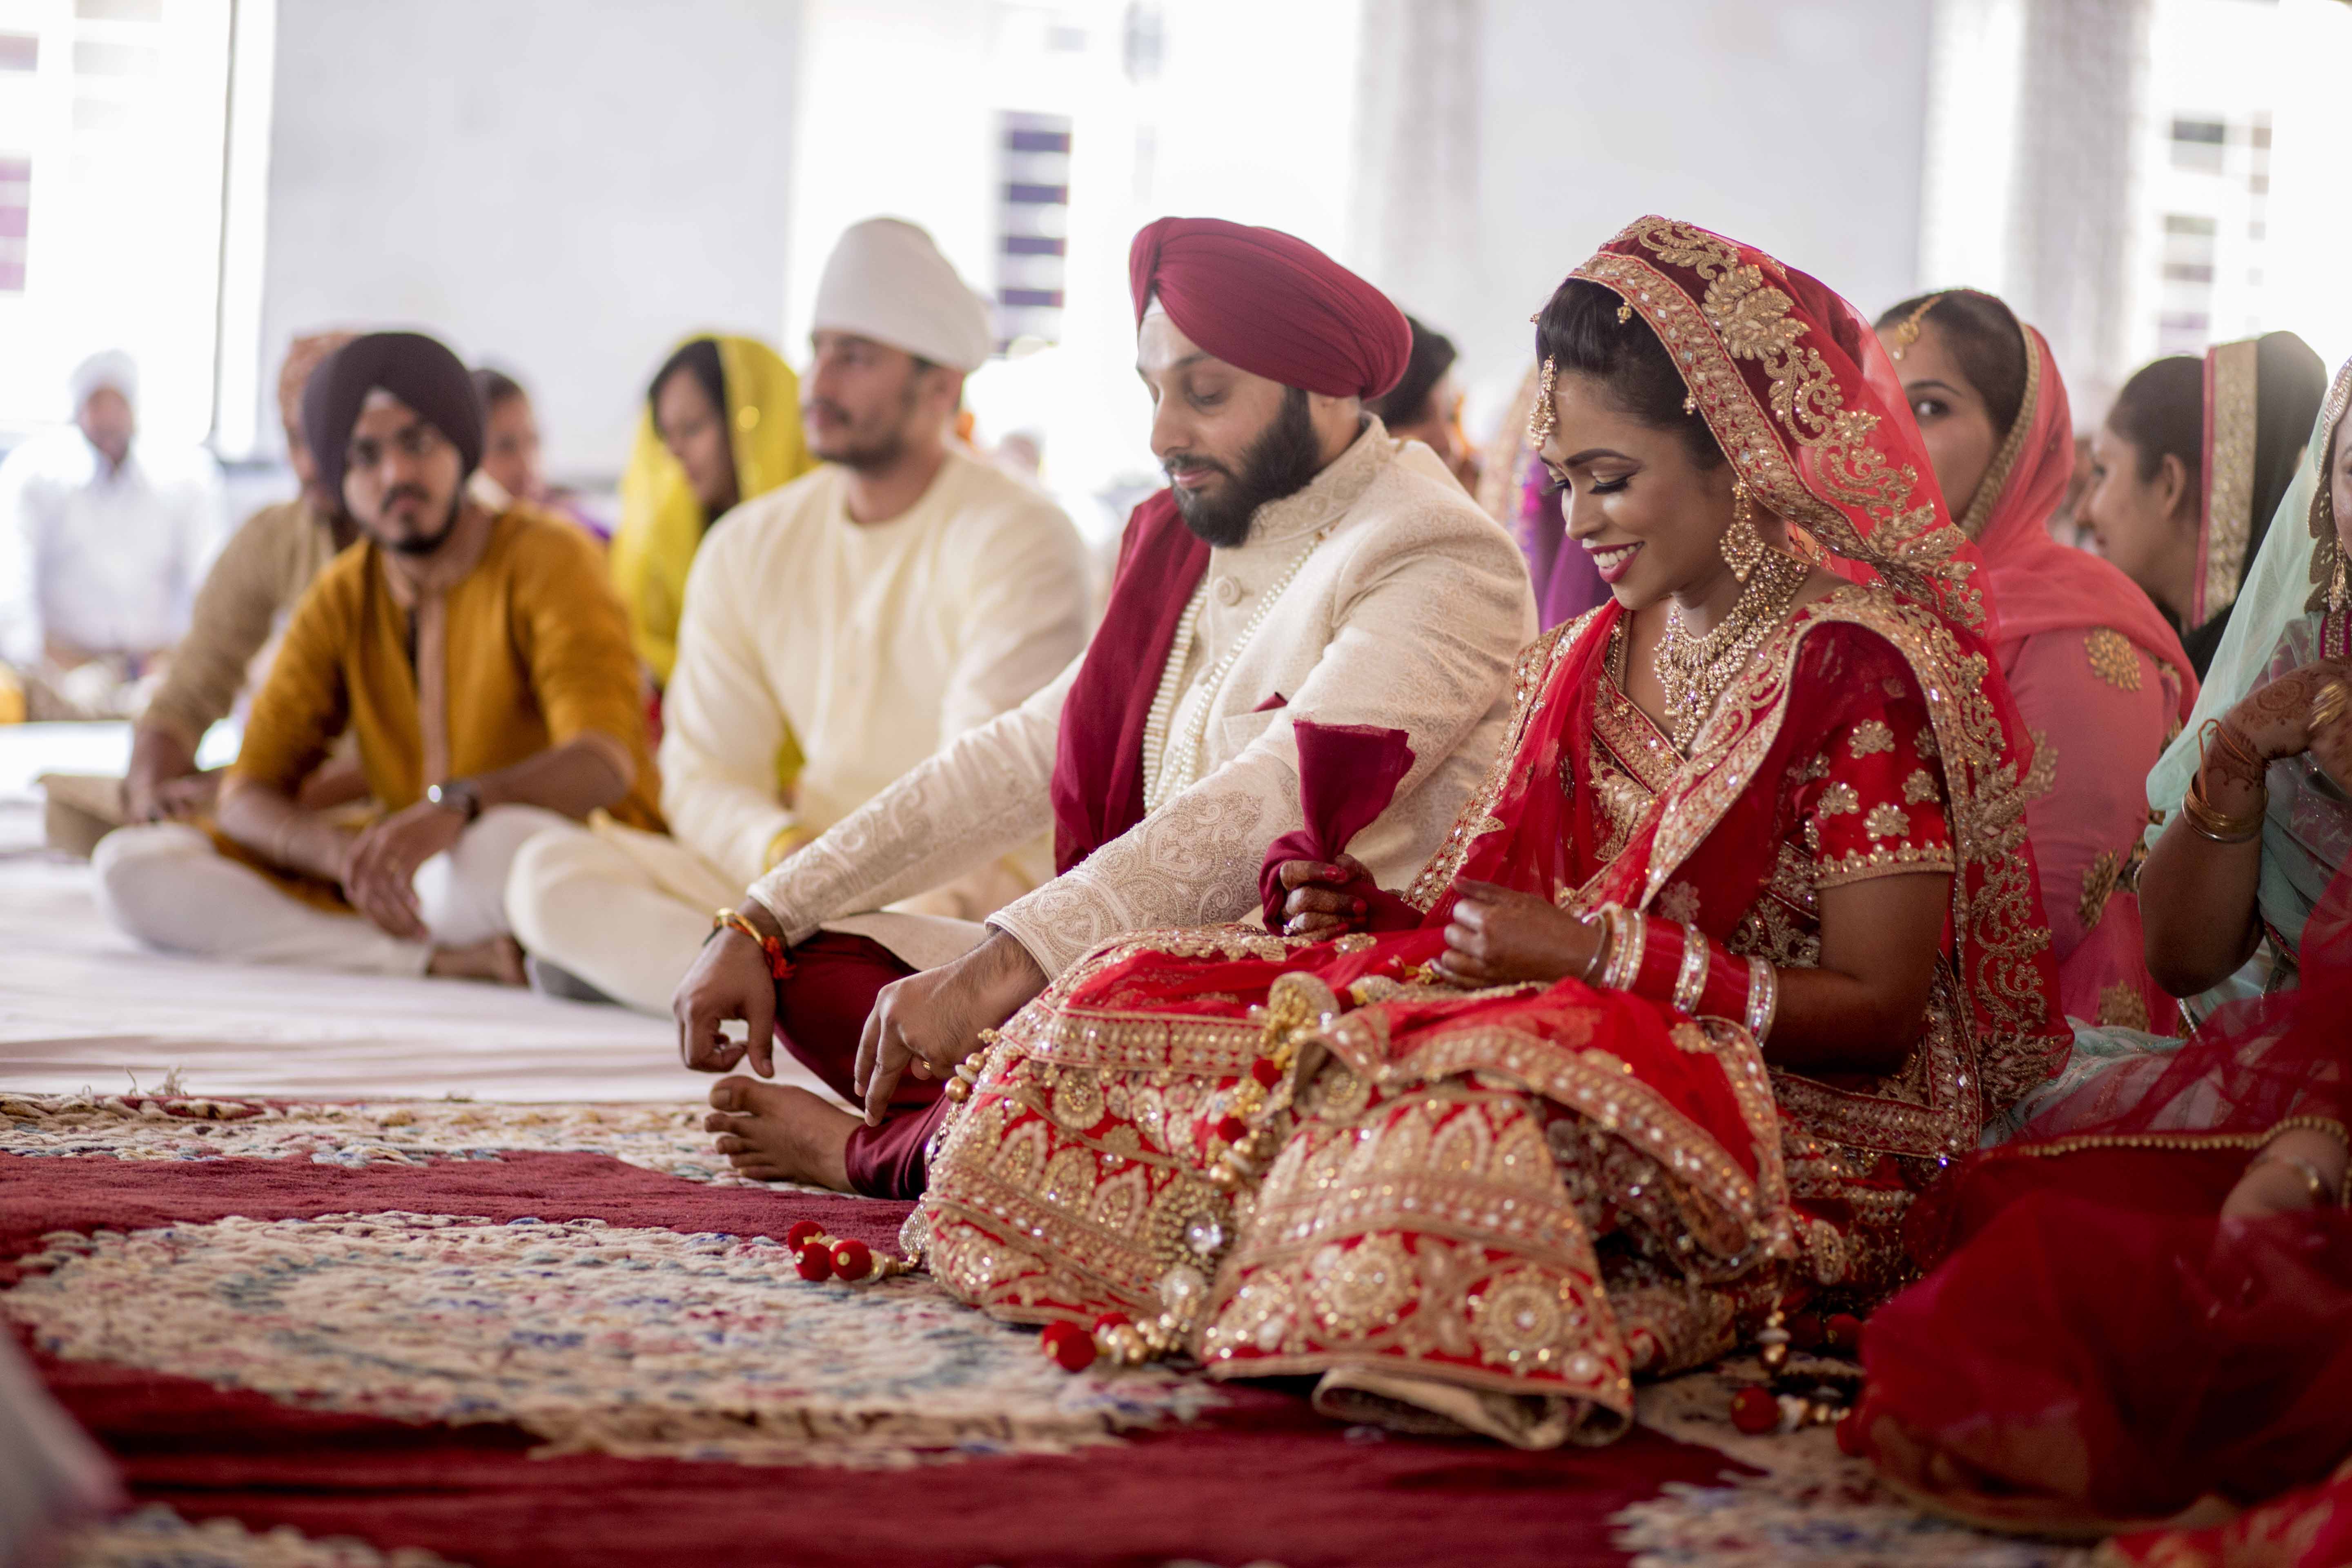 Harpreet & Hanika- A Sikh wedding